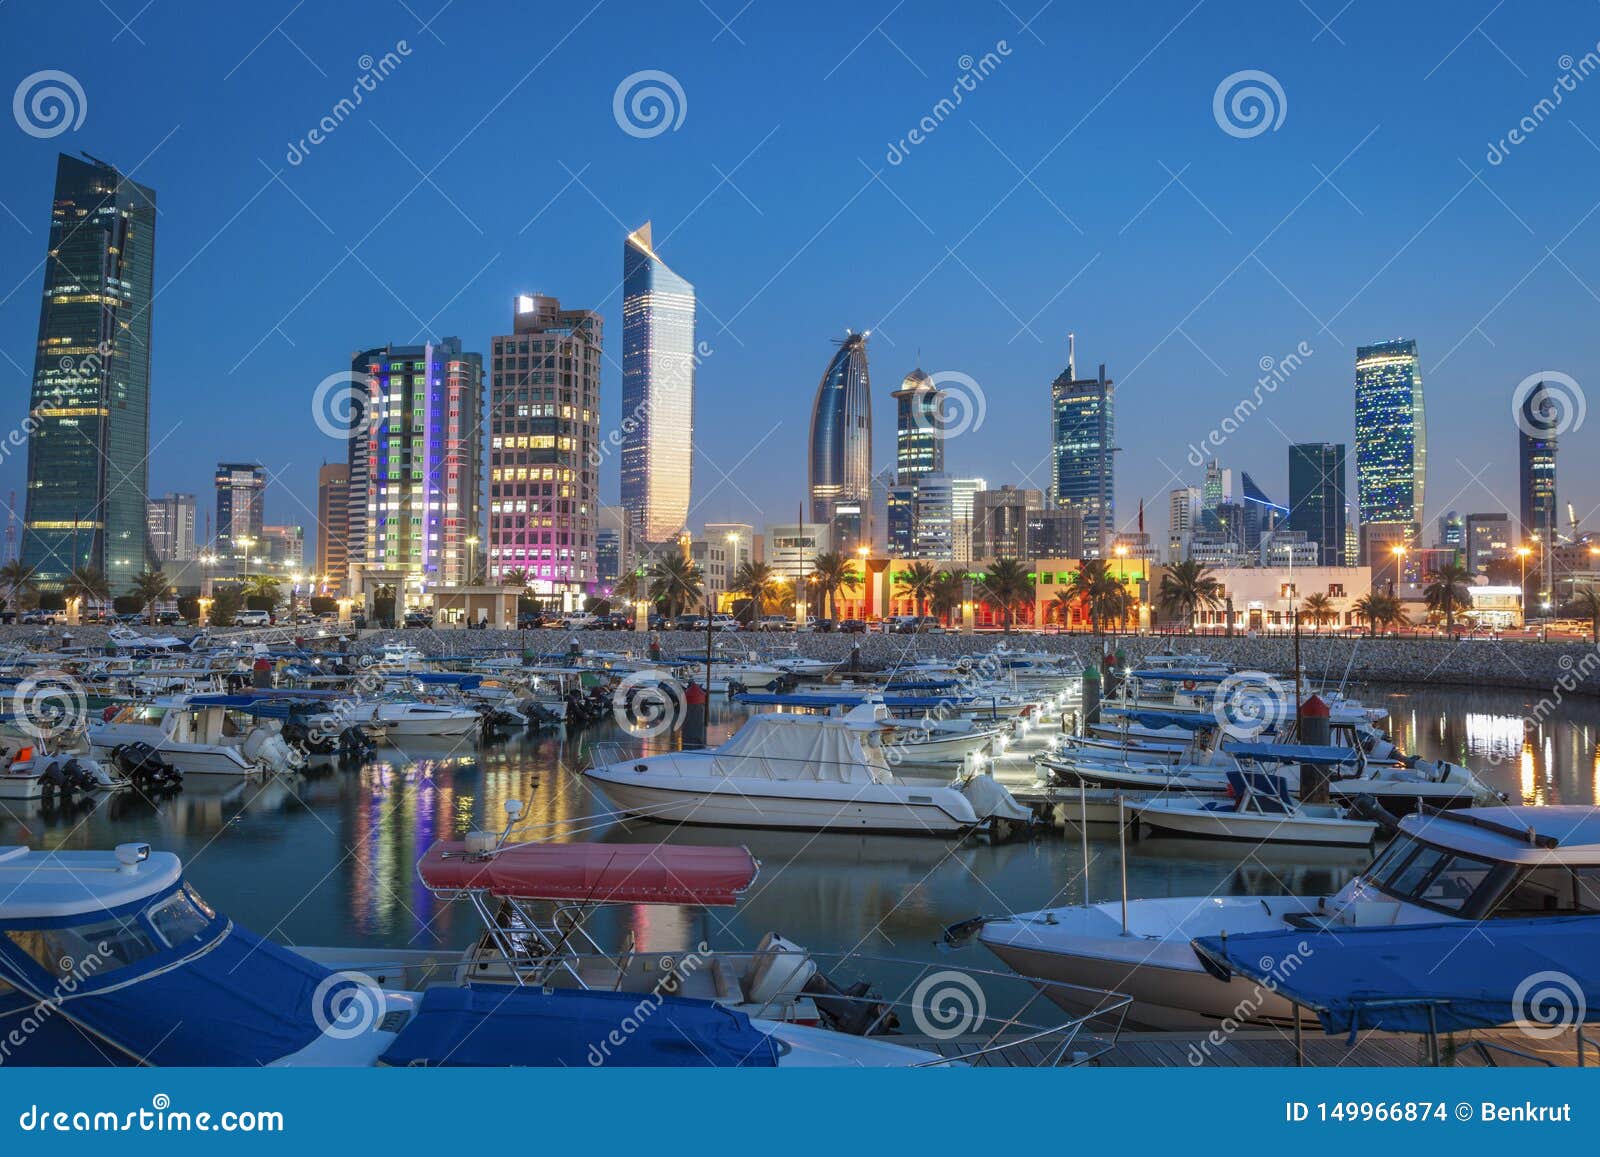 skyline of kuwait city at evening